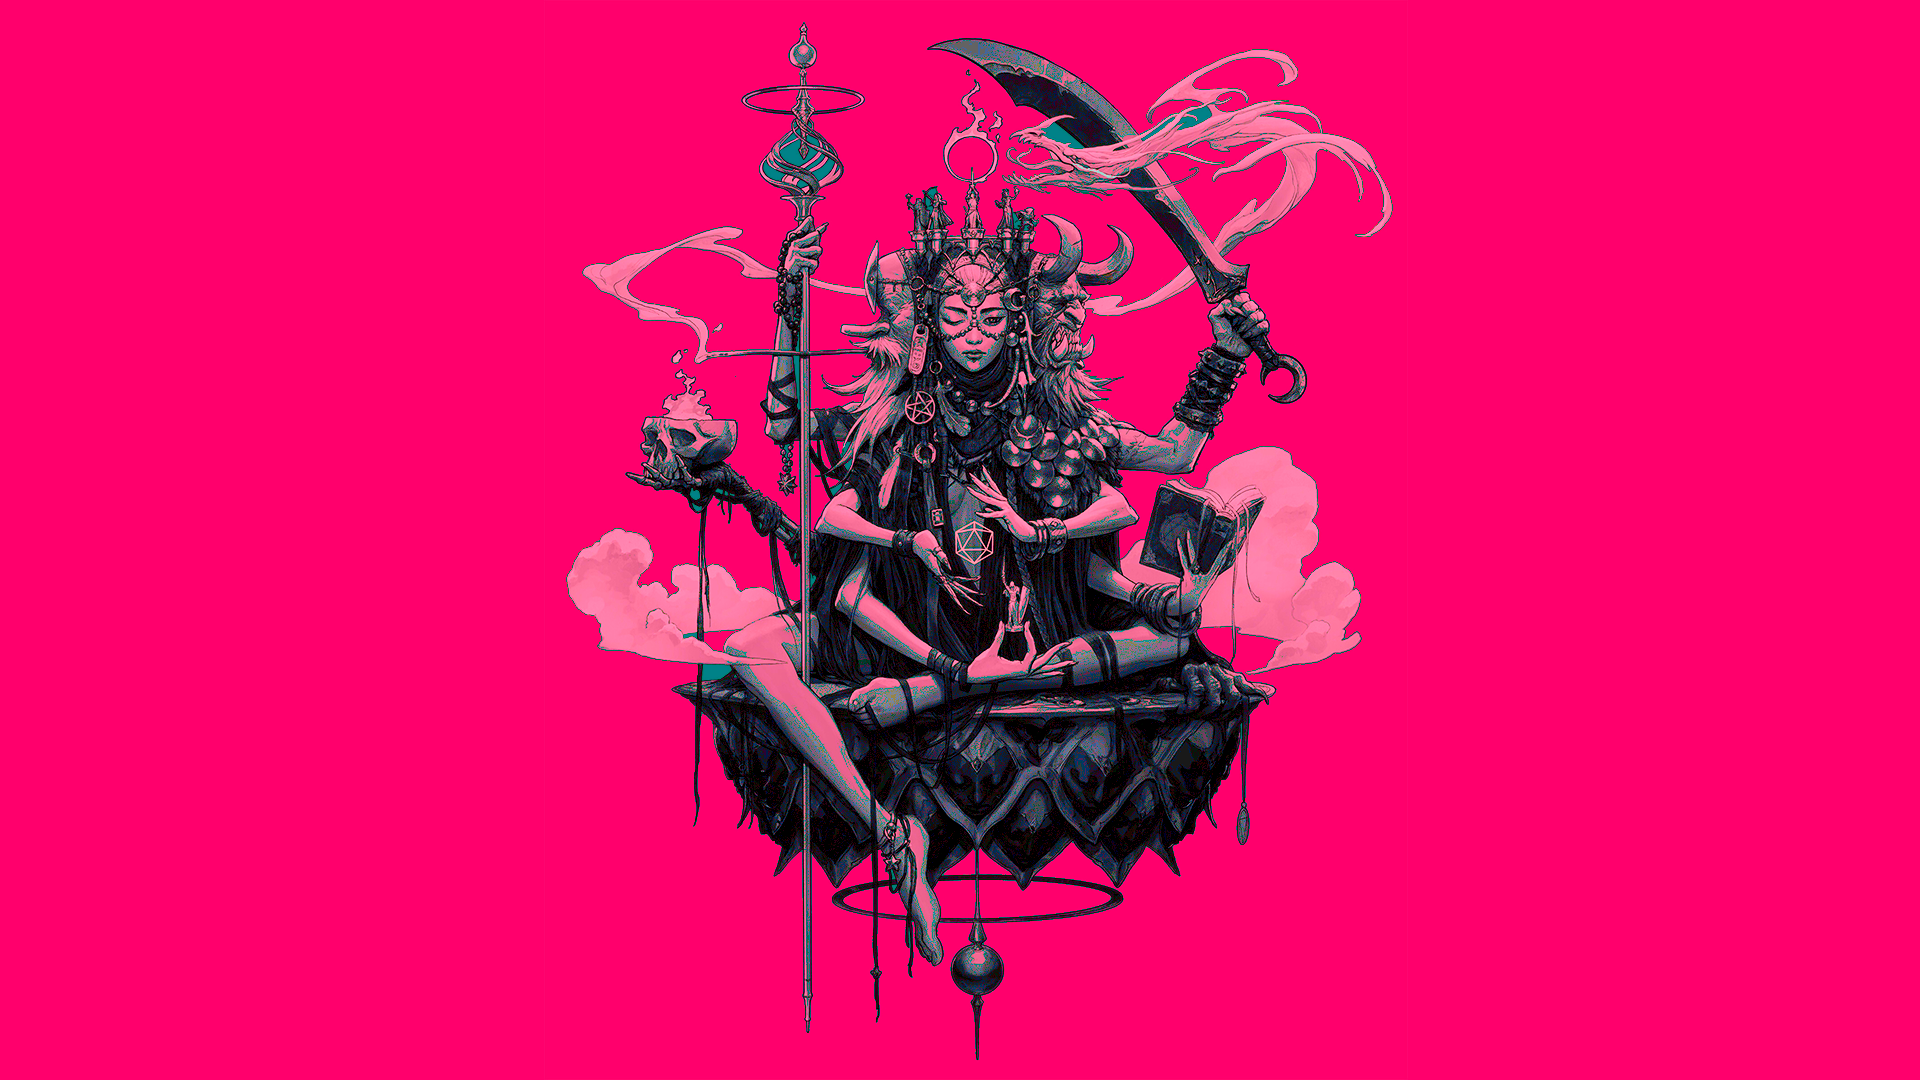 General 1920x1080 digital art sword smoke skull staff Hindu Mythology pink pink background wink fantasy art